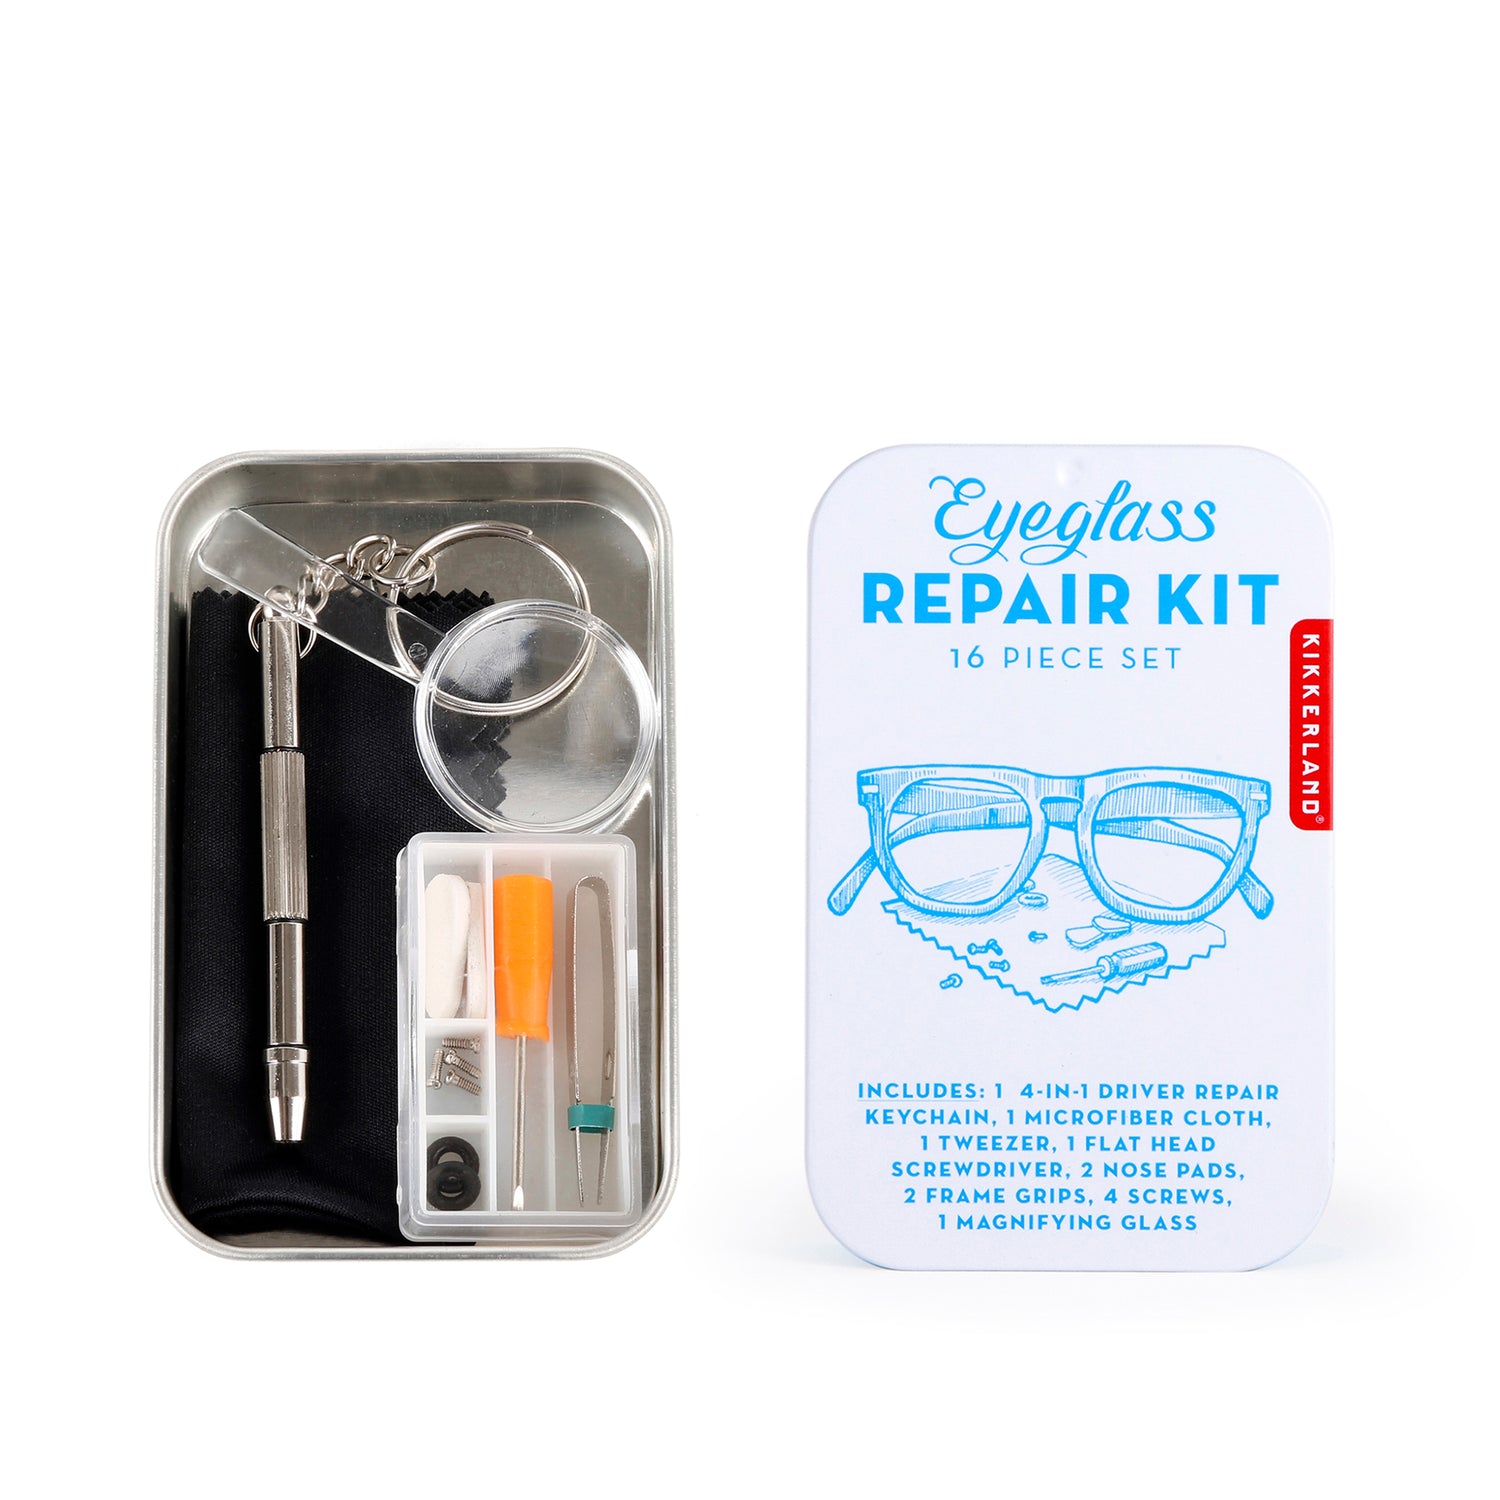 Emergency Sewing Kit – Kikkerland Design Inc